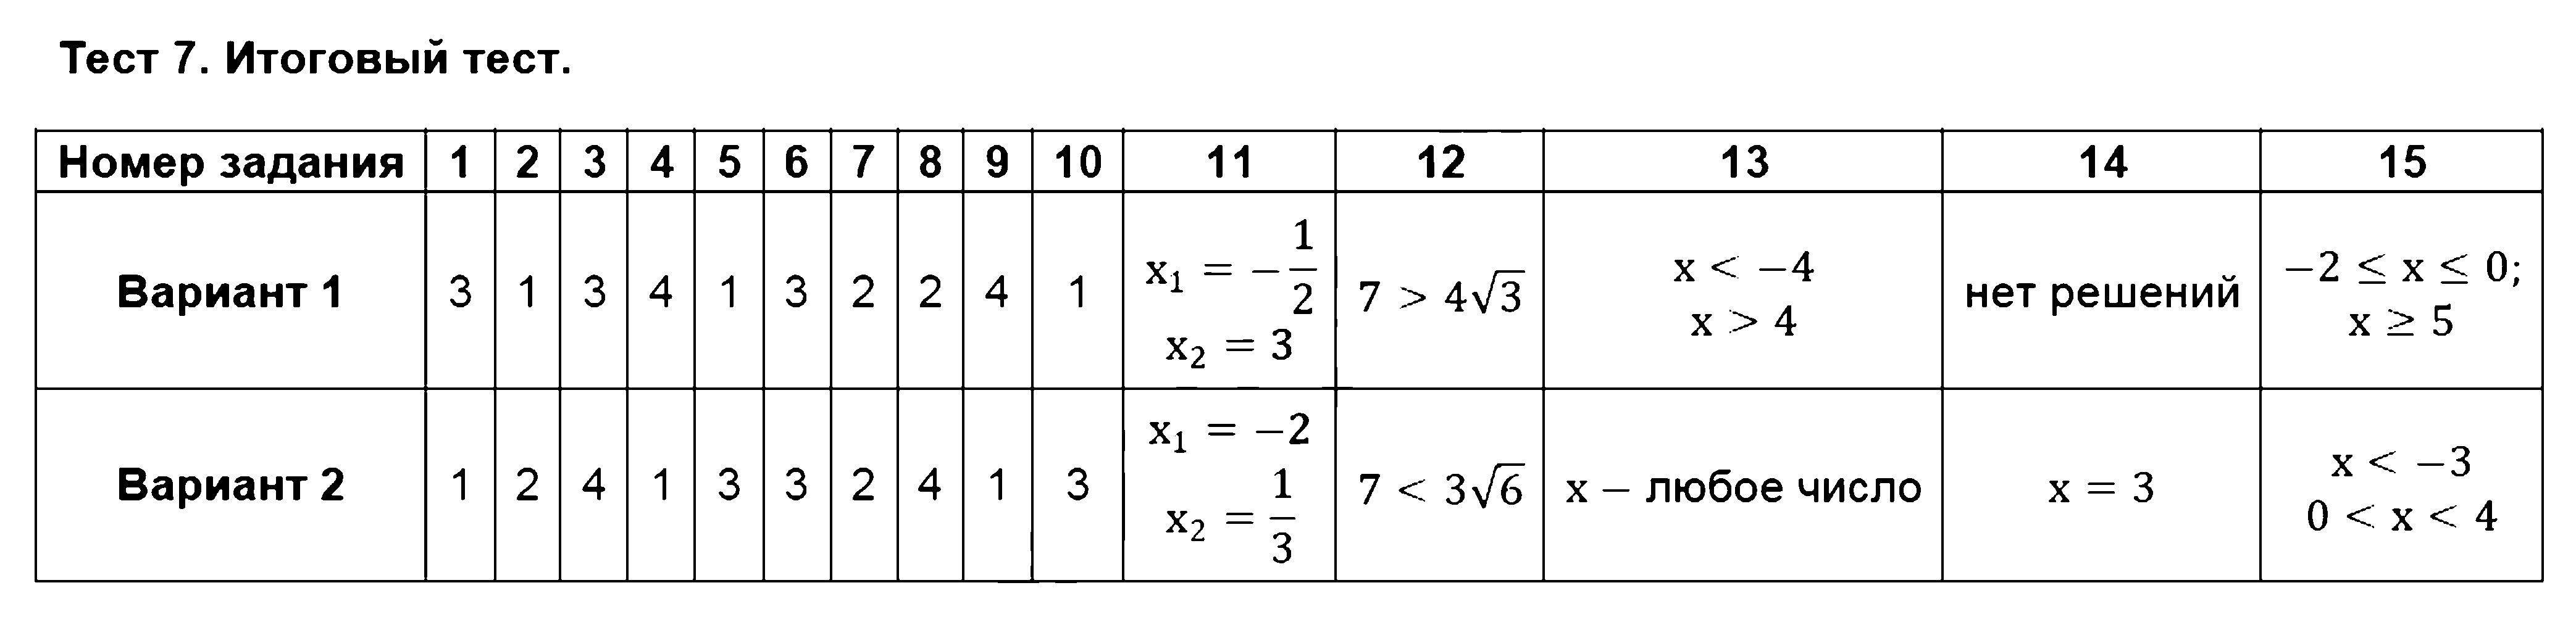 ГДЗ Алгебра 8 класс - Тест 7. Итоговый тест